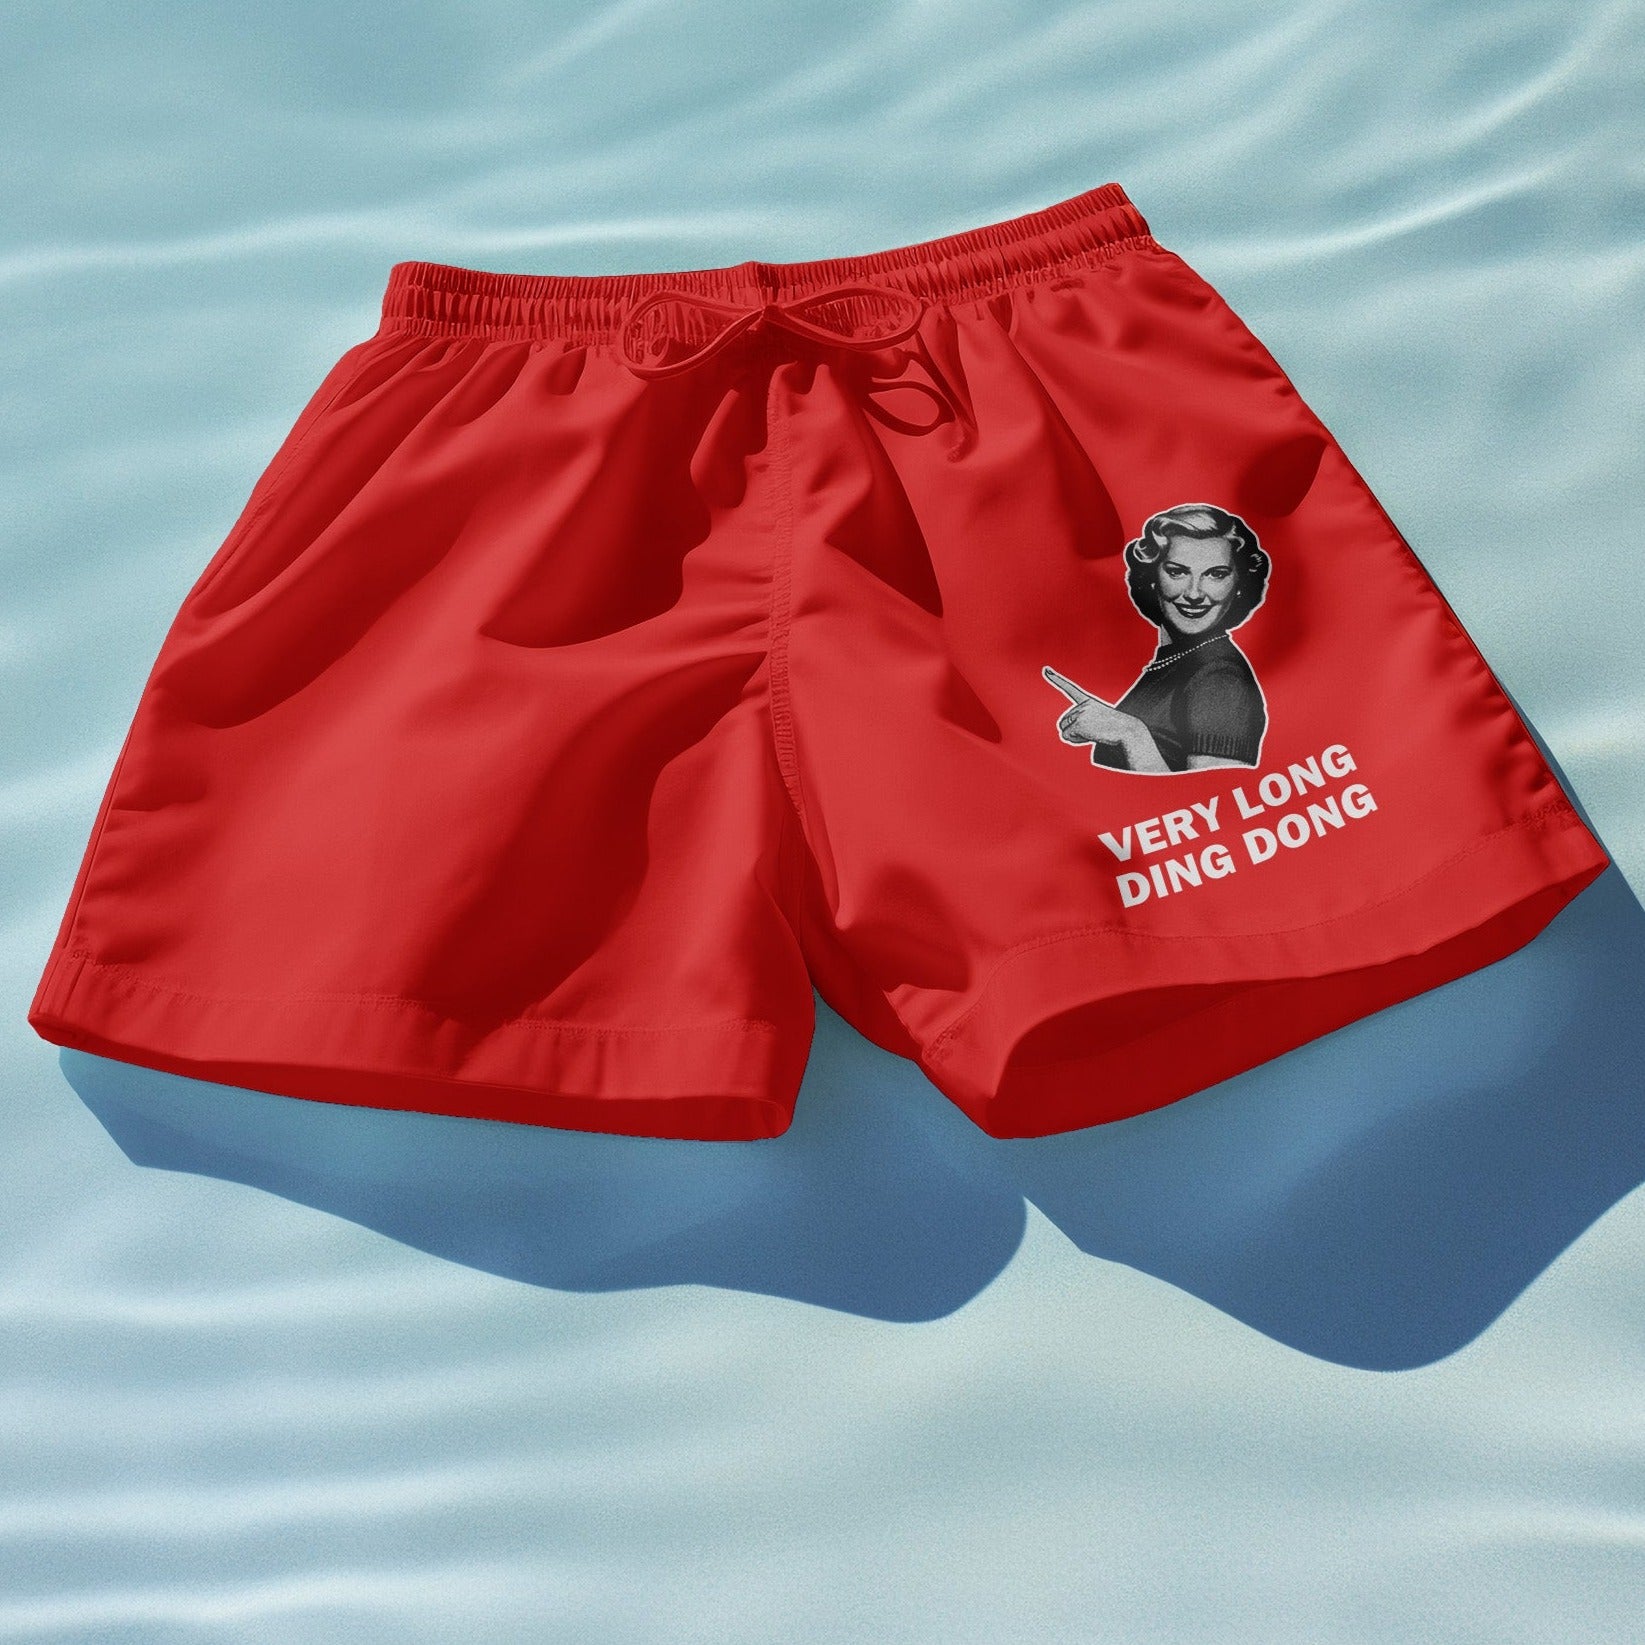 VERY LONG - Swimming trunks